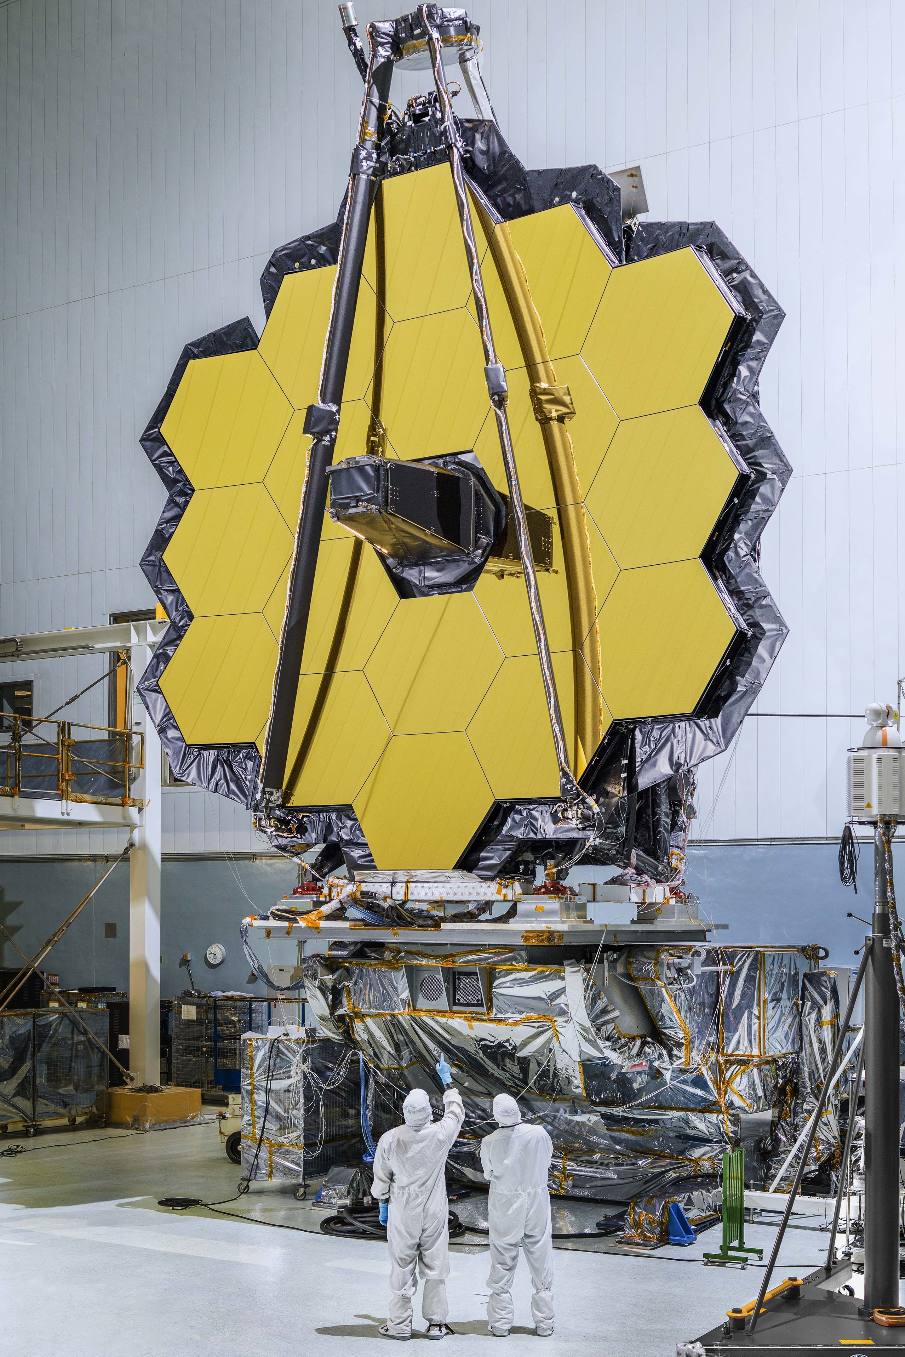 James Webb Space Telescope launch slips to 2019